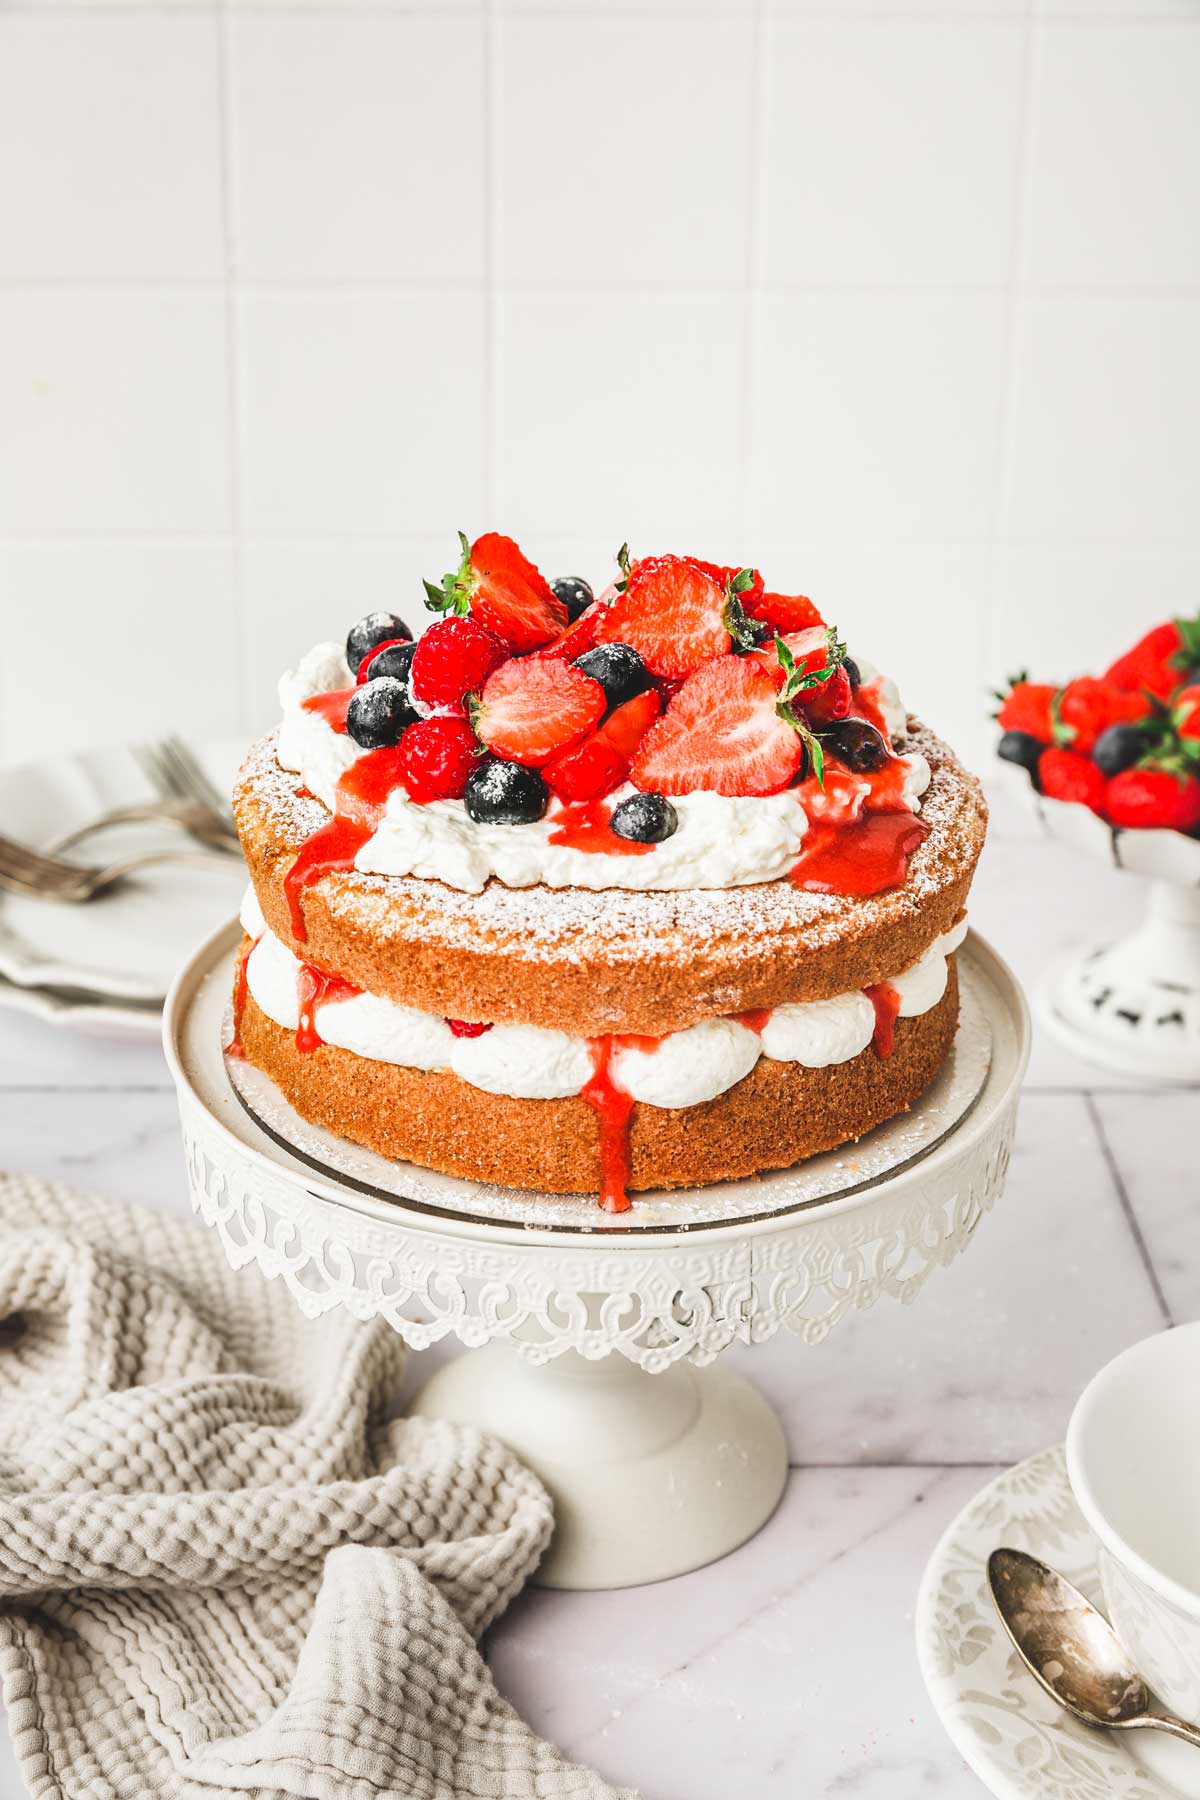 Victoria Sponge Cake | Erren's Kitchen